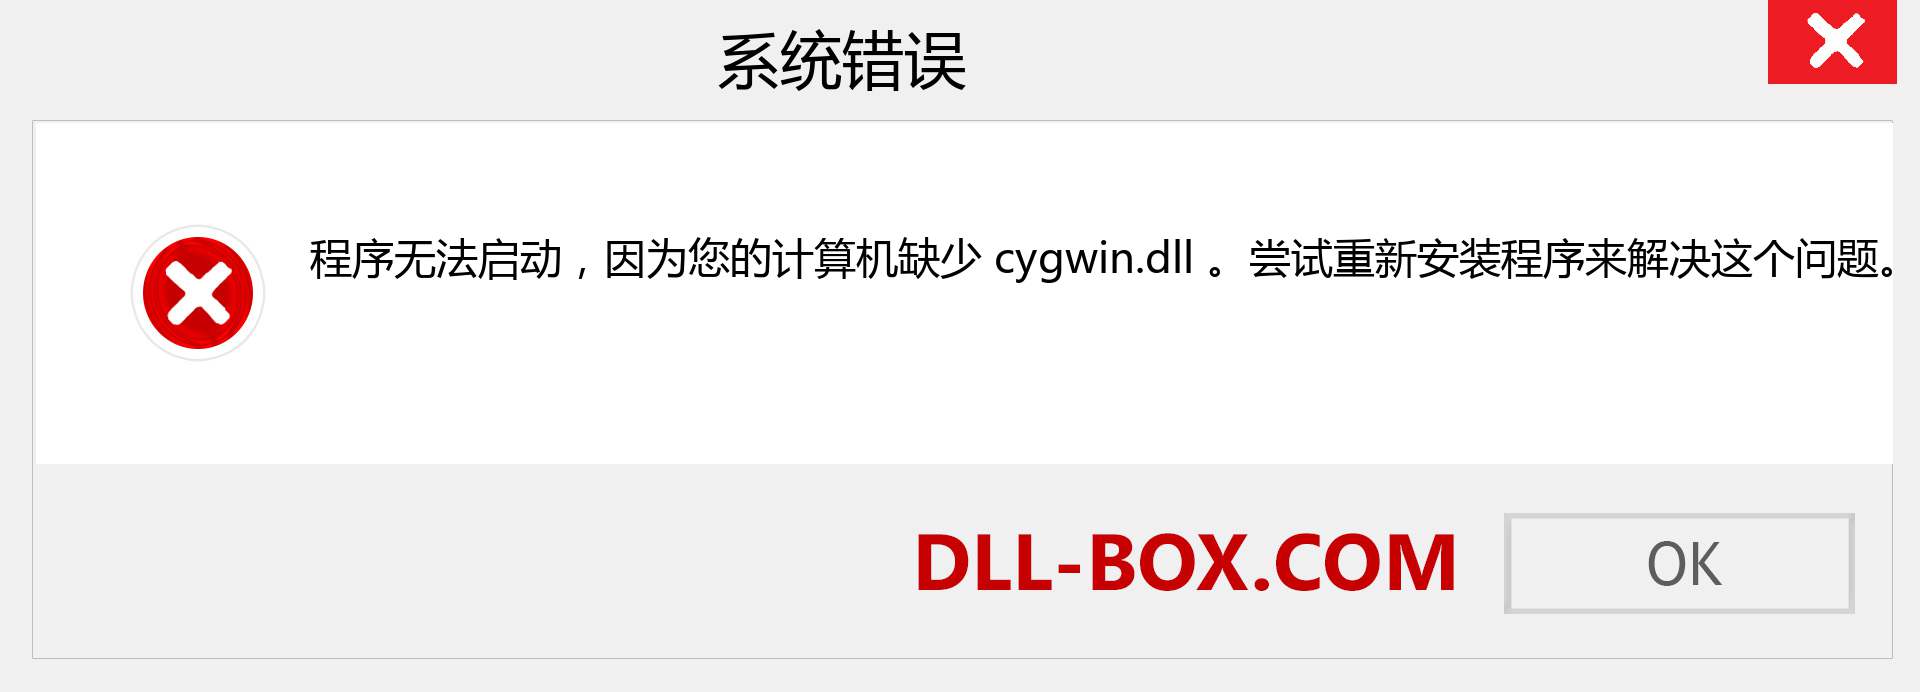 cygwin.dll 文件丢失？。 适用于 Windows 7、8、10 的下载 - 修复 Windows、照片、图像上的 cygwin dll 丢失错误